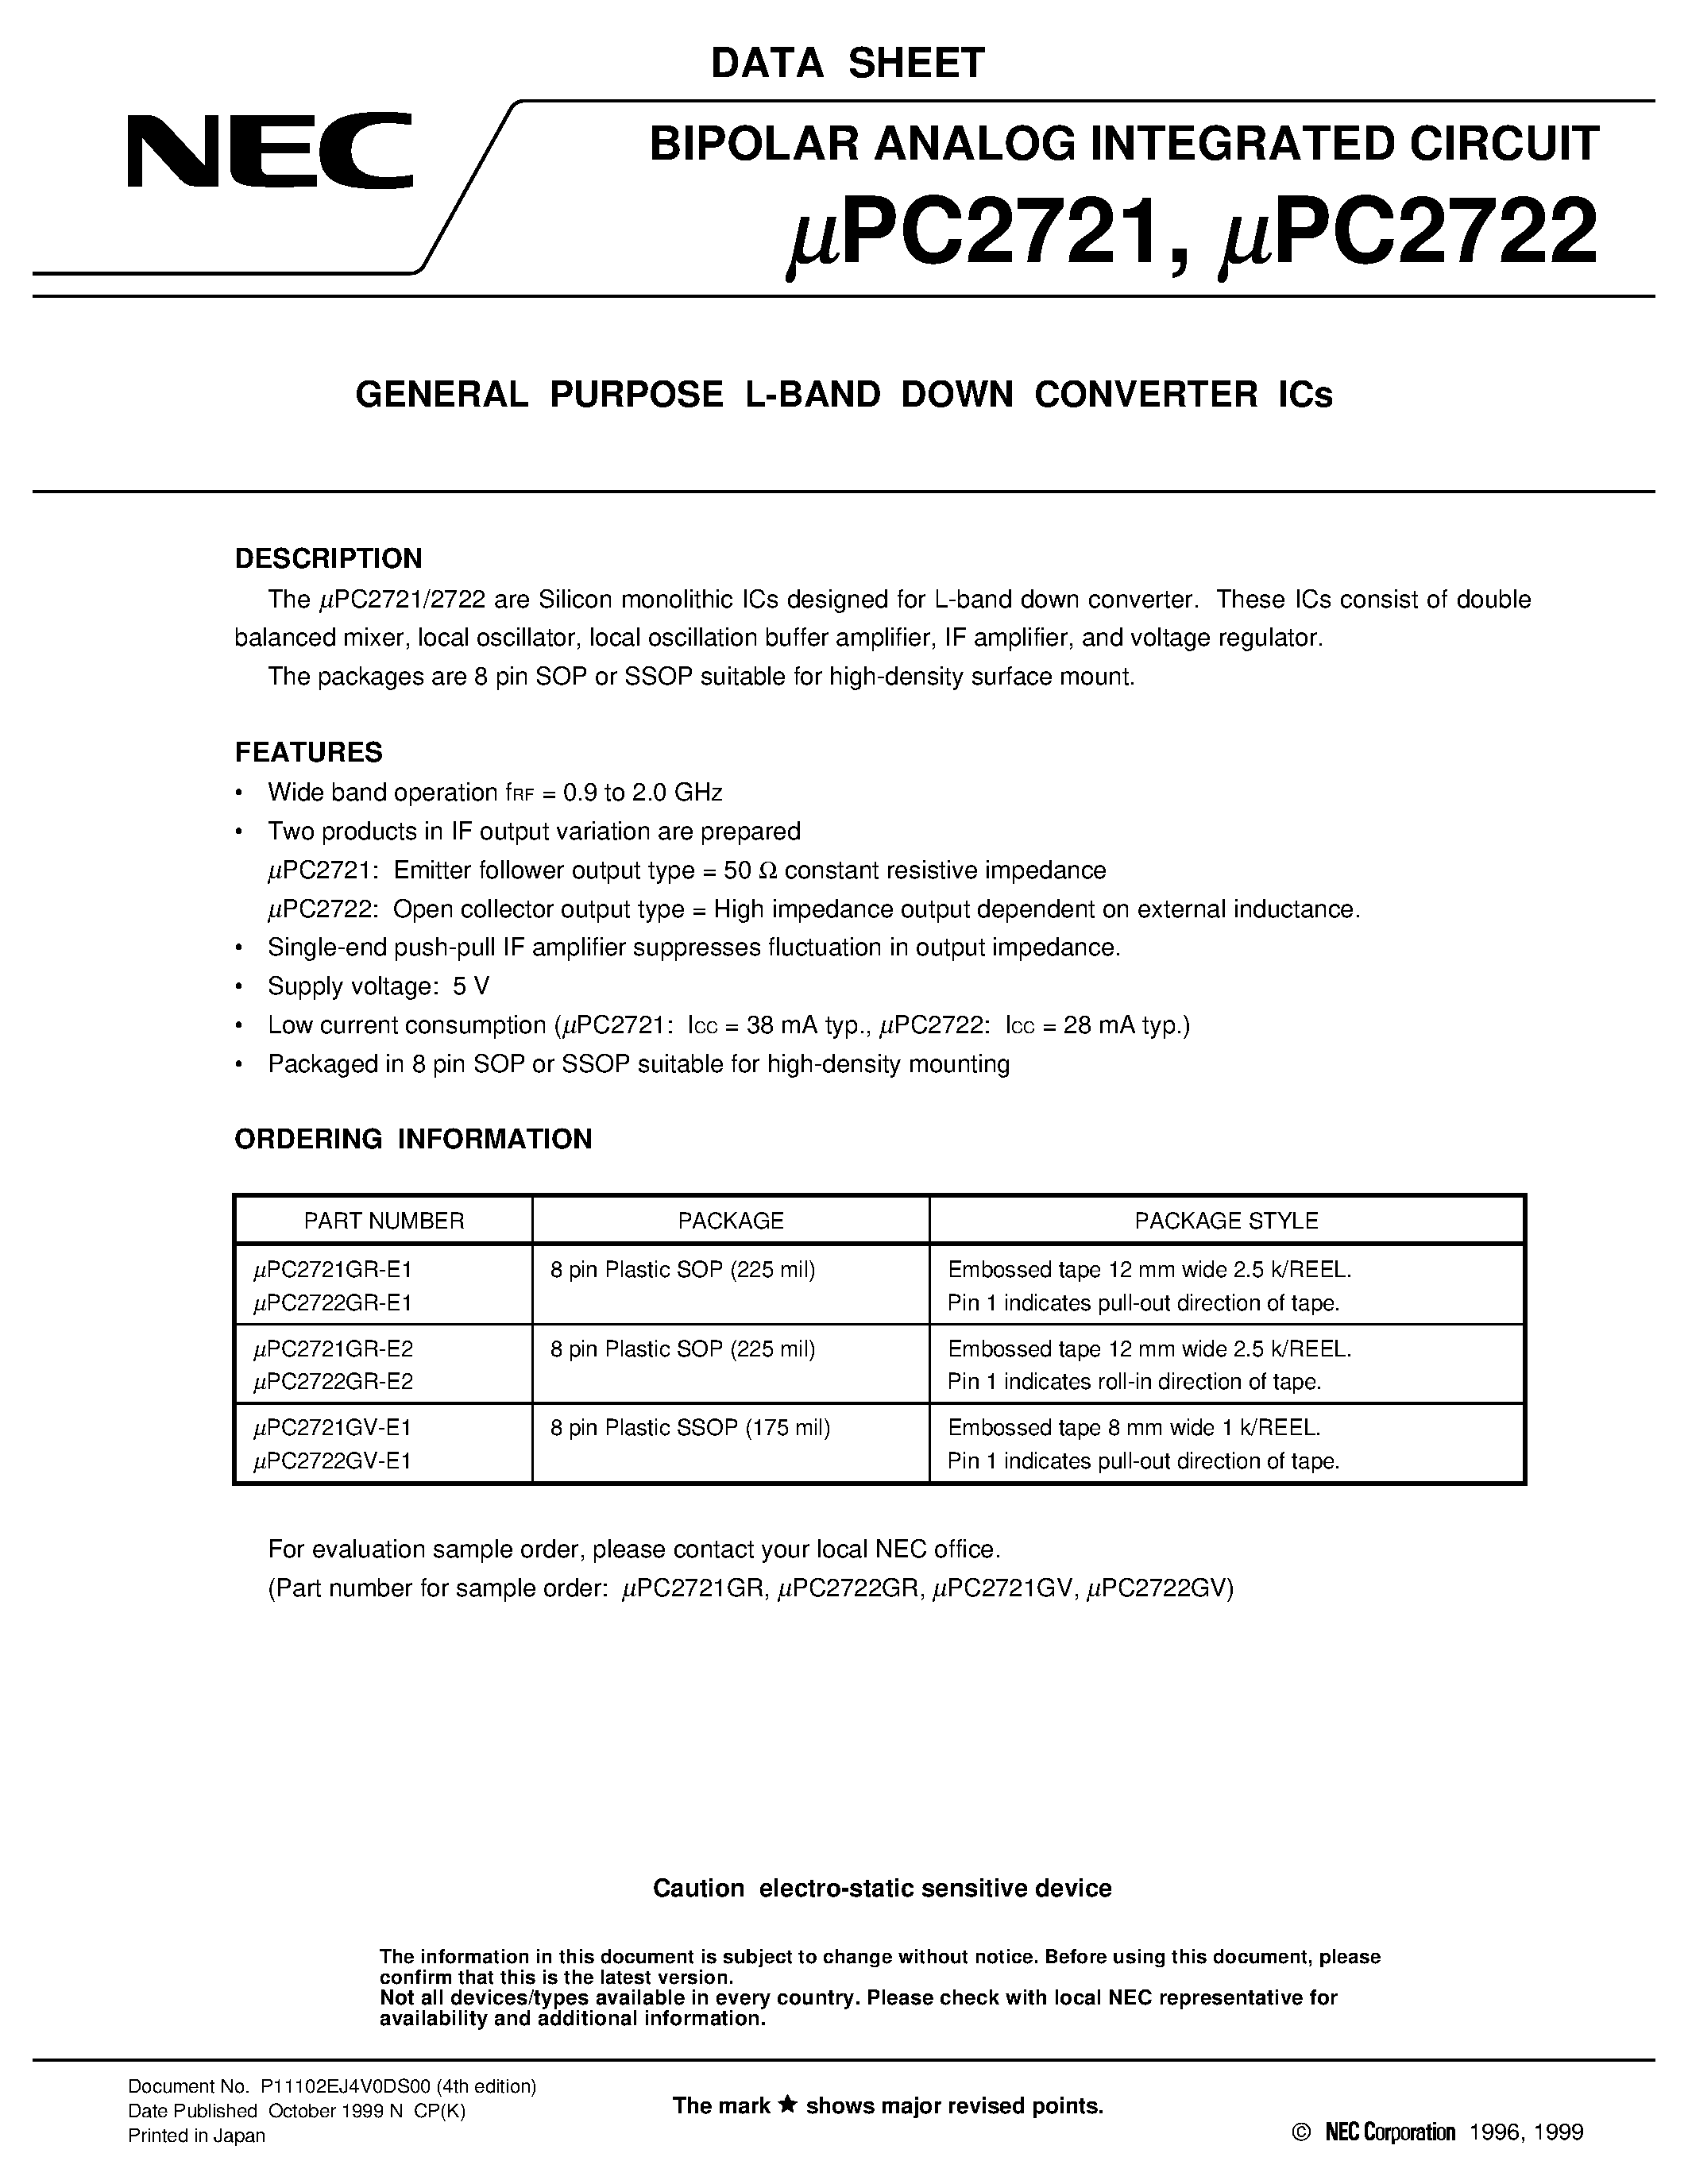 Datasheet UPC2721GV-E1 - GENERAL PURPOSE L-BAND DOWN CONVERTER ICs page 1